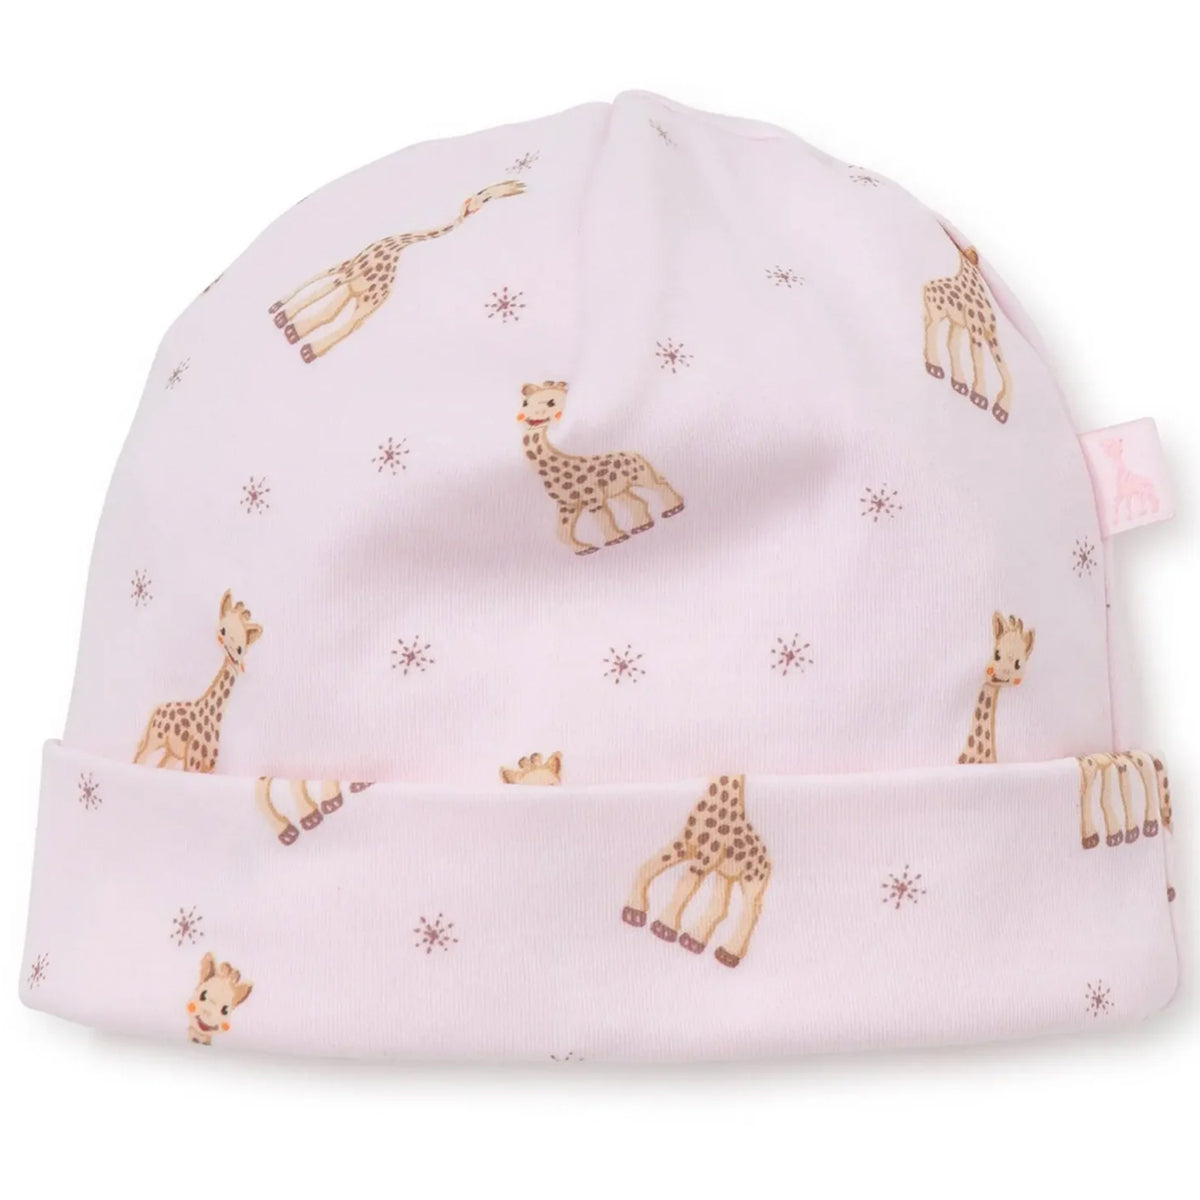 Sophie La Girafe Pink Print Hat